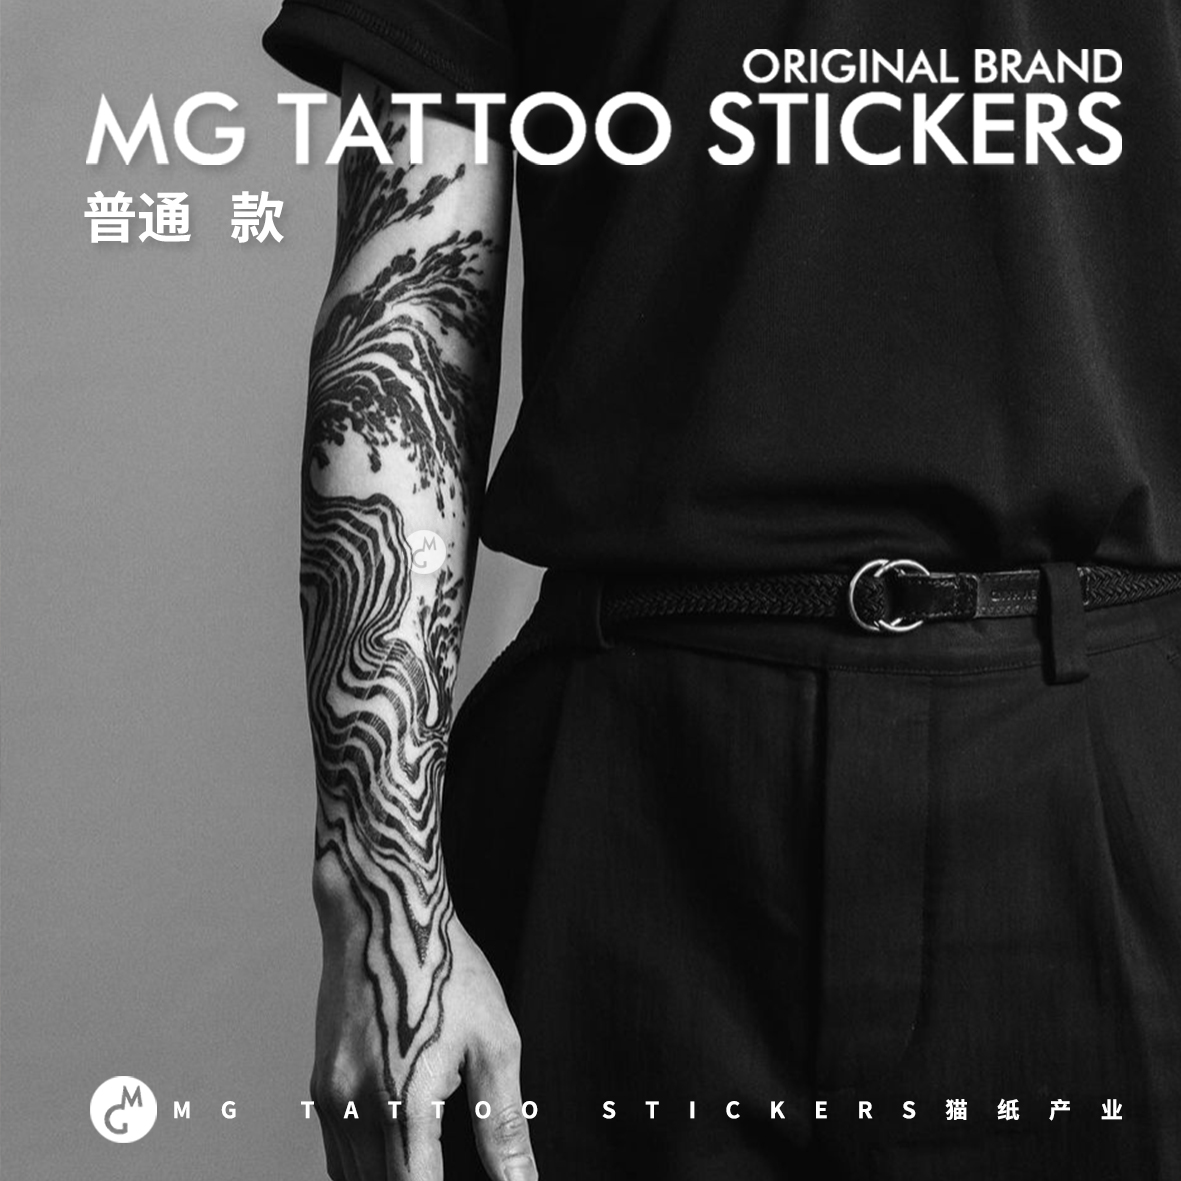 MG tattoo 意境泼墨冷淡风个性大图水墨图案酷炫花臂纹身贴纸男女